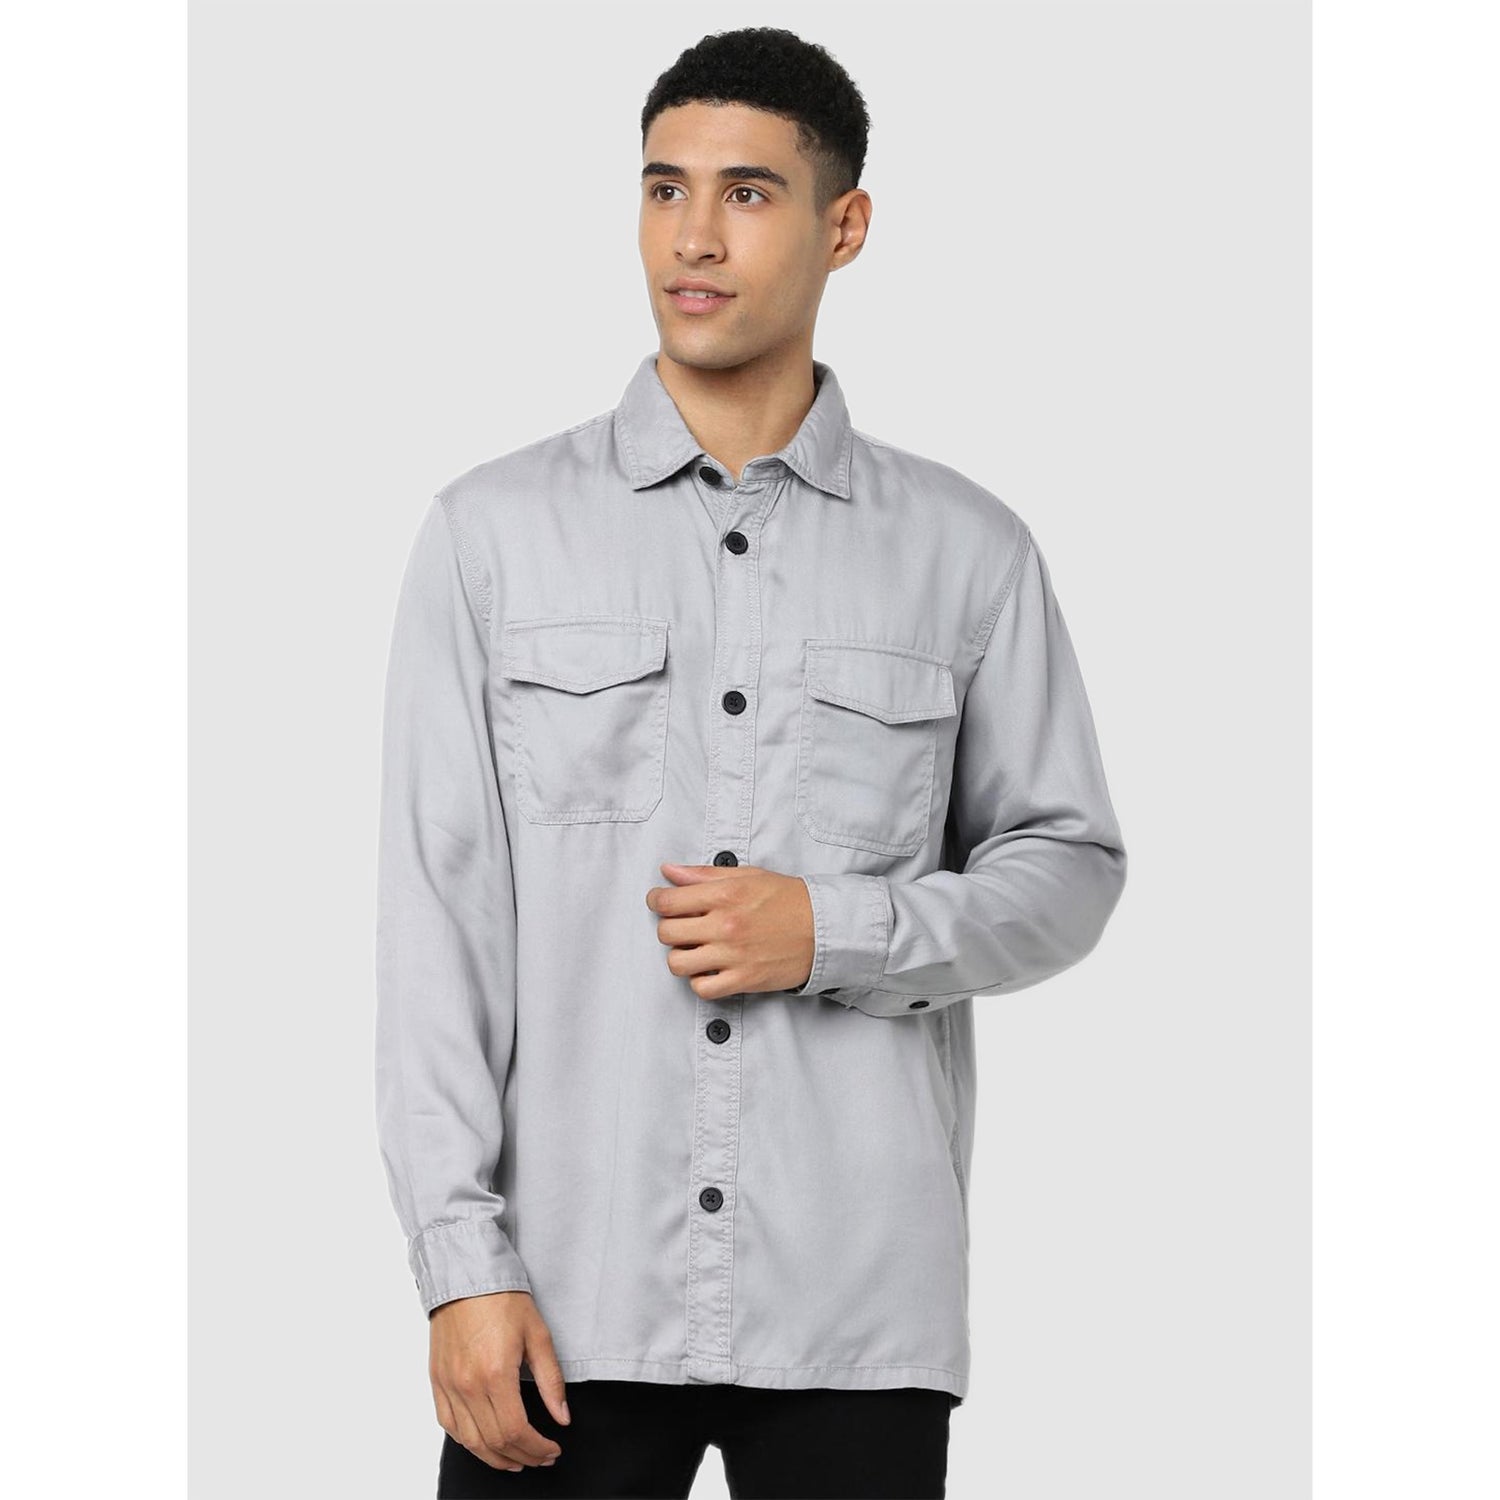 Light Grey Regular Fit Solid Shirt (Various Sizes)